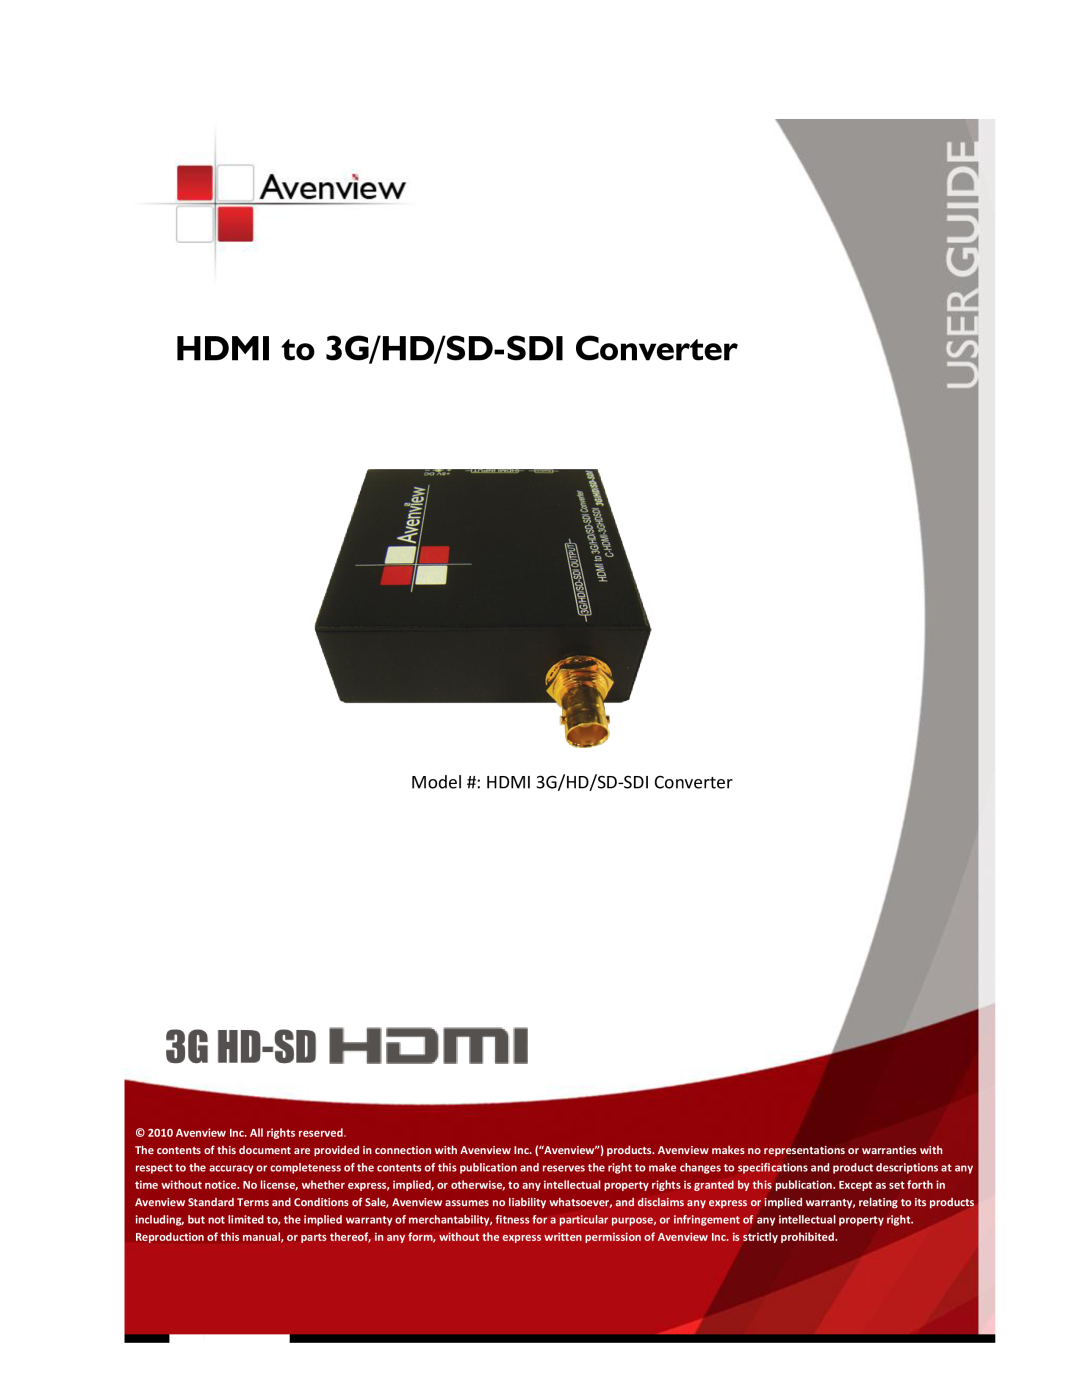 Avenview specifications Model # HDMI 3G/HD/SD-SDI Converter, HDMI to 3G/HD/SD-SDI Converter 